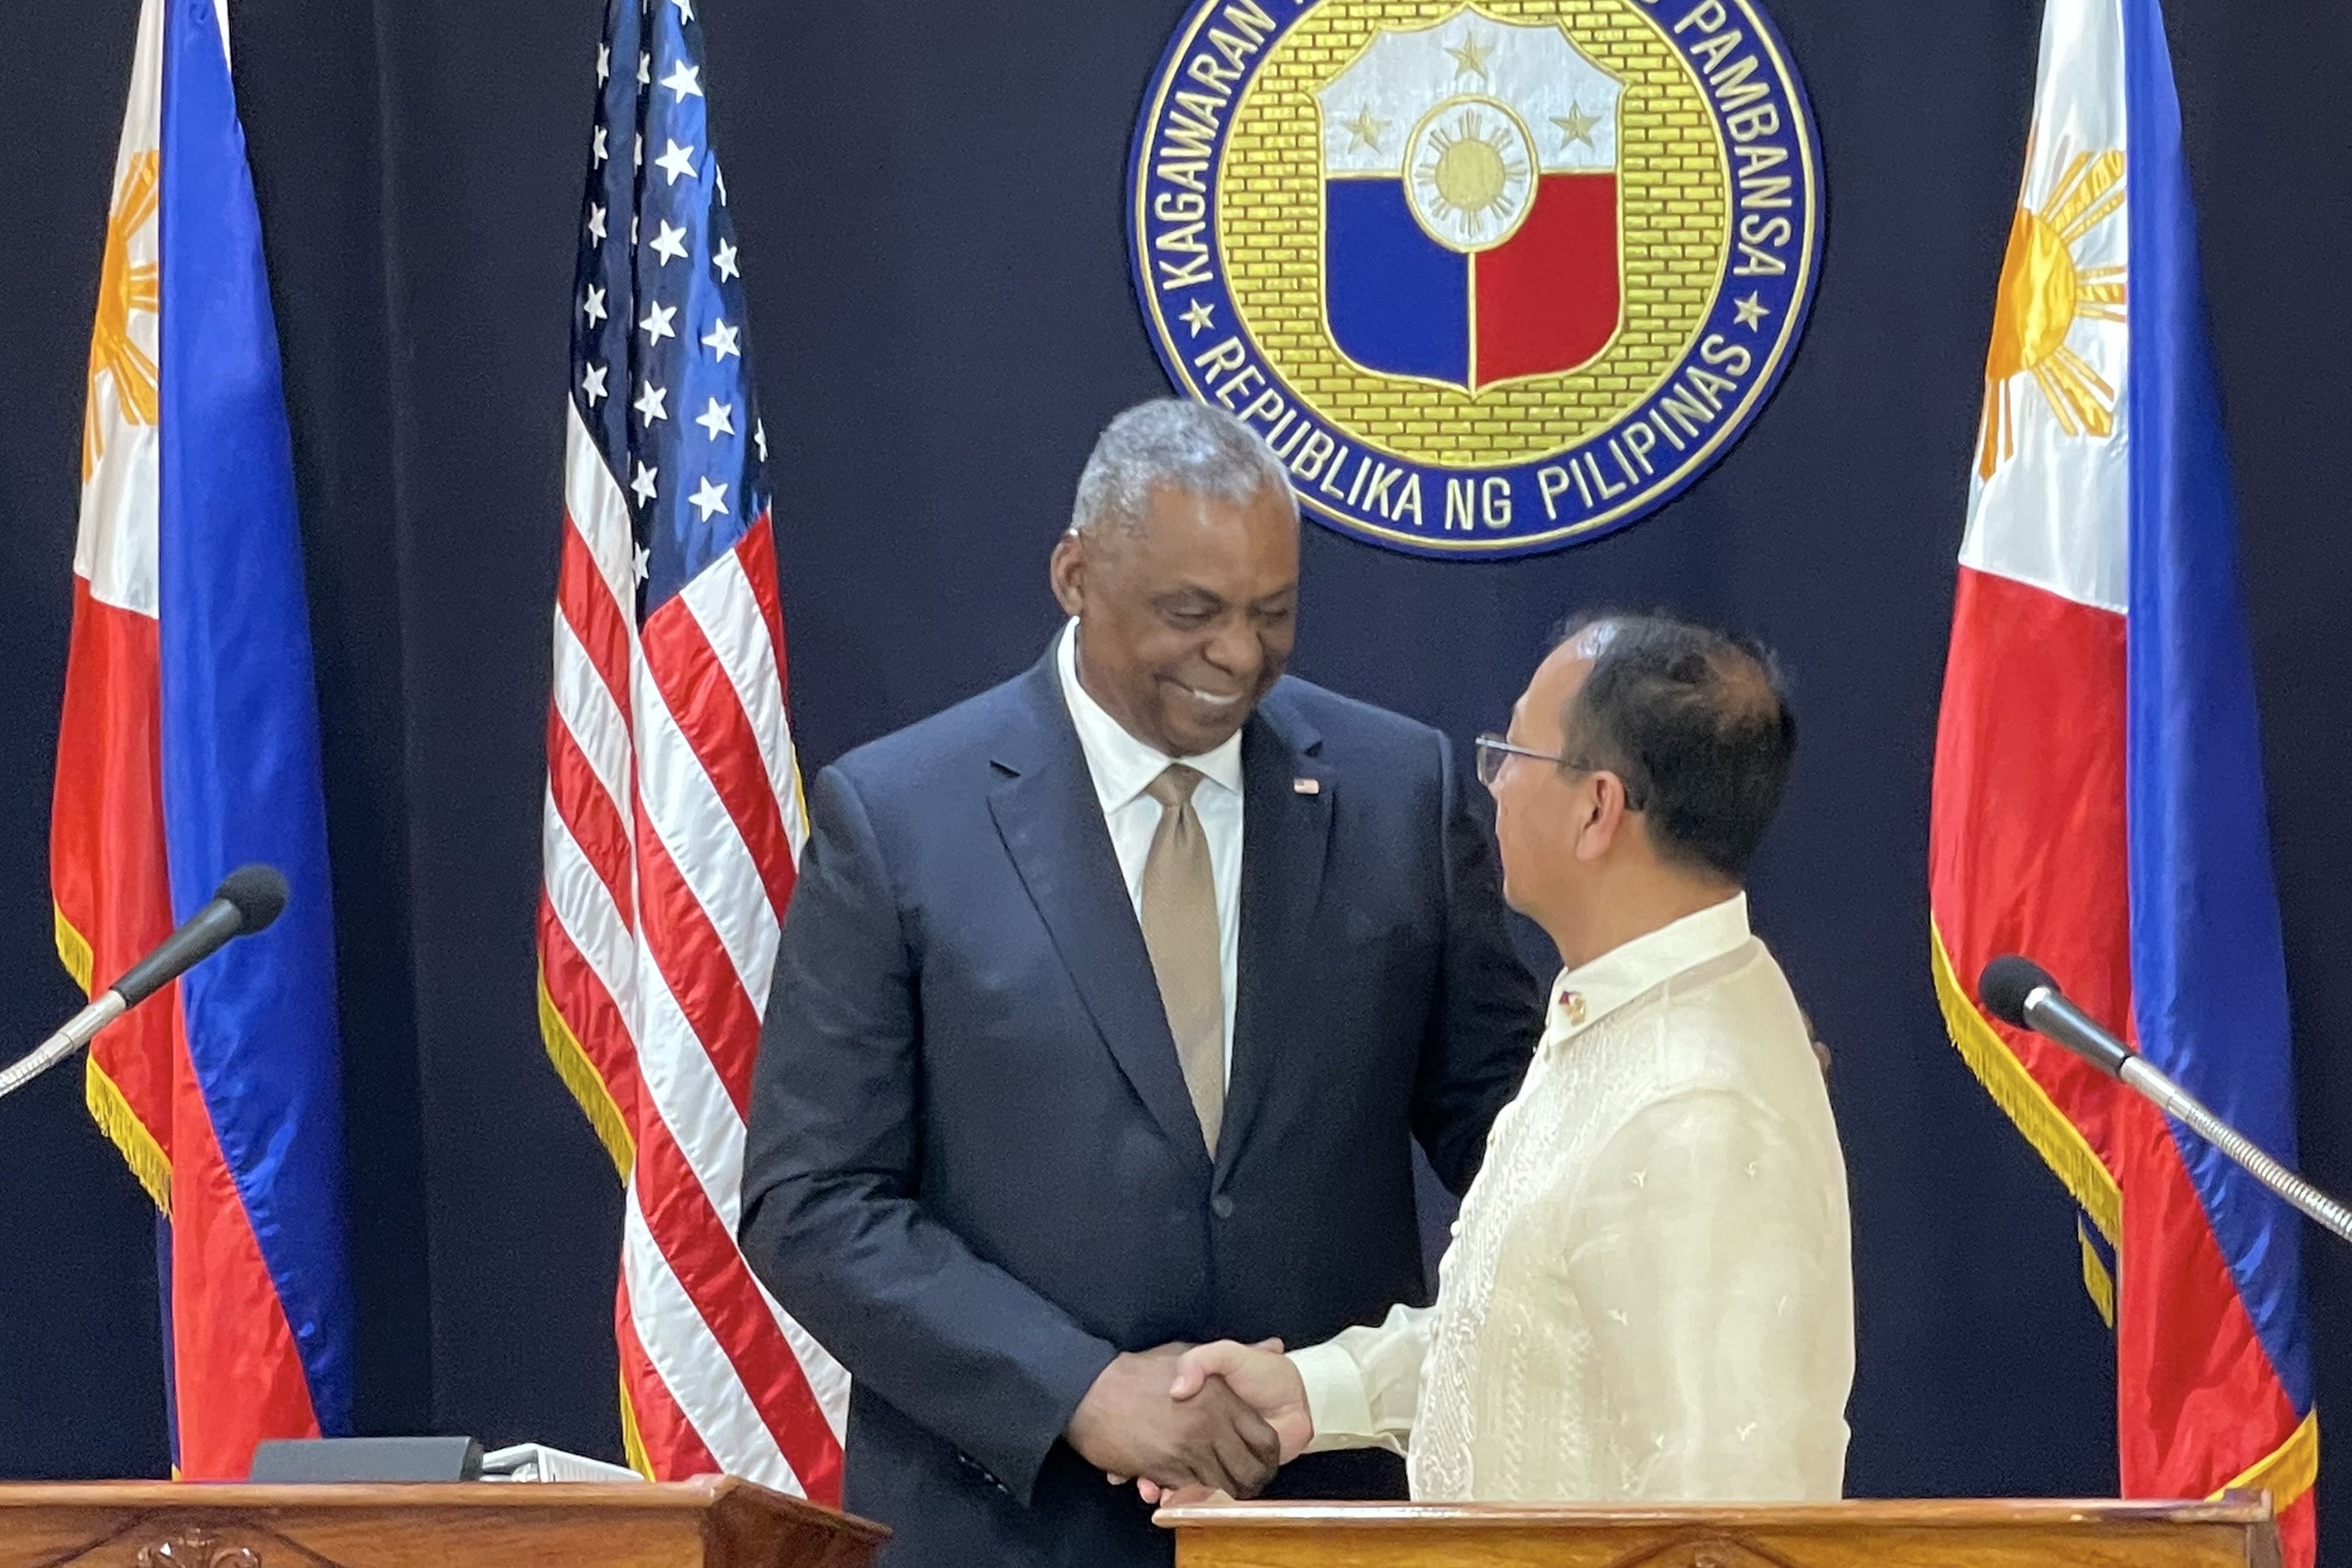 US Defense Secretary Lloyd Austin (L) and Philippines Defense Secretary Carlito Galvez Jnr (R), meet in efforts to boost bilateral ties between the two countries. Photo: EPA-EFE/Pool